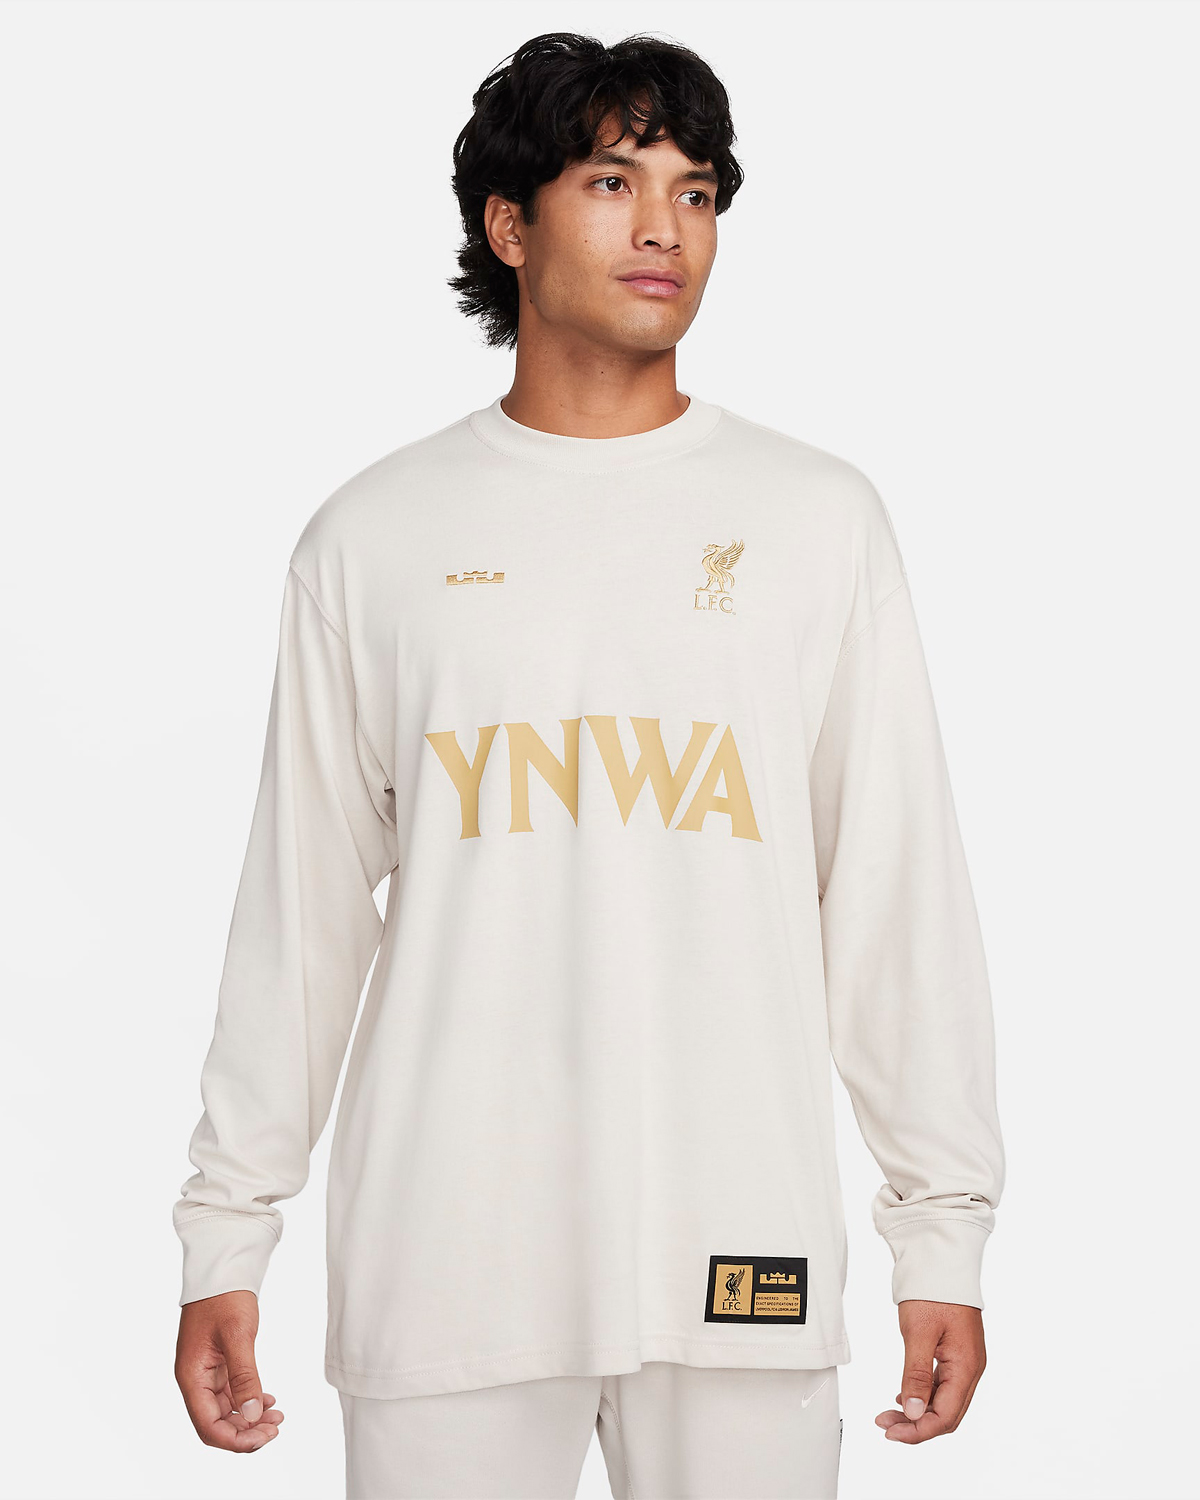 Nike-LeBron-James-Liverpool-FC-Long-Sleeve-Soccer-T-Shirt